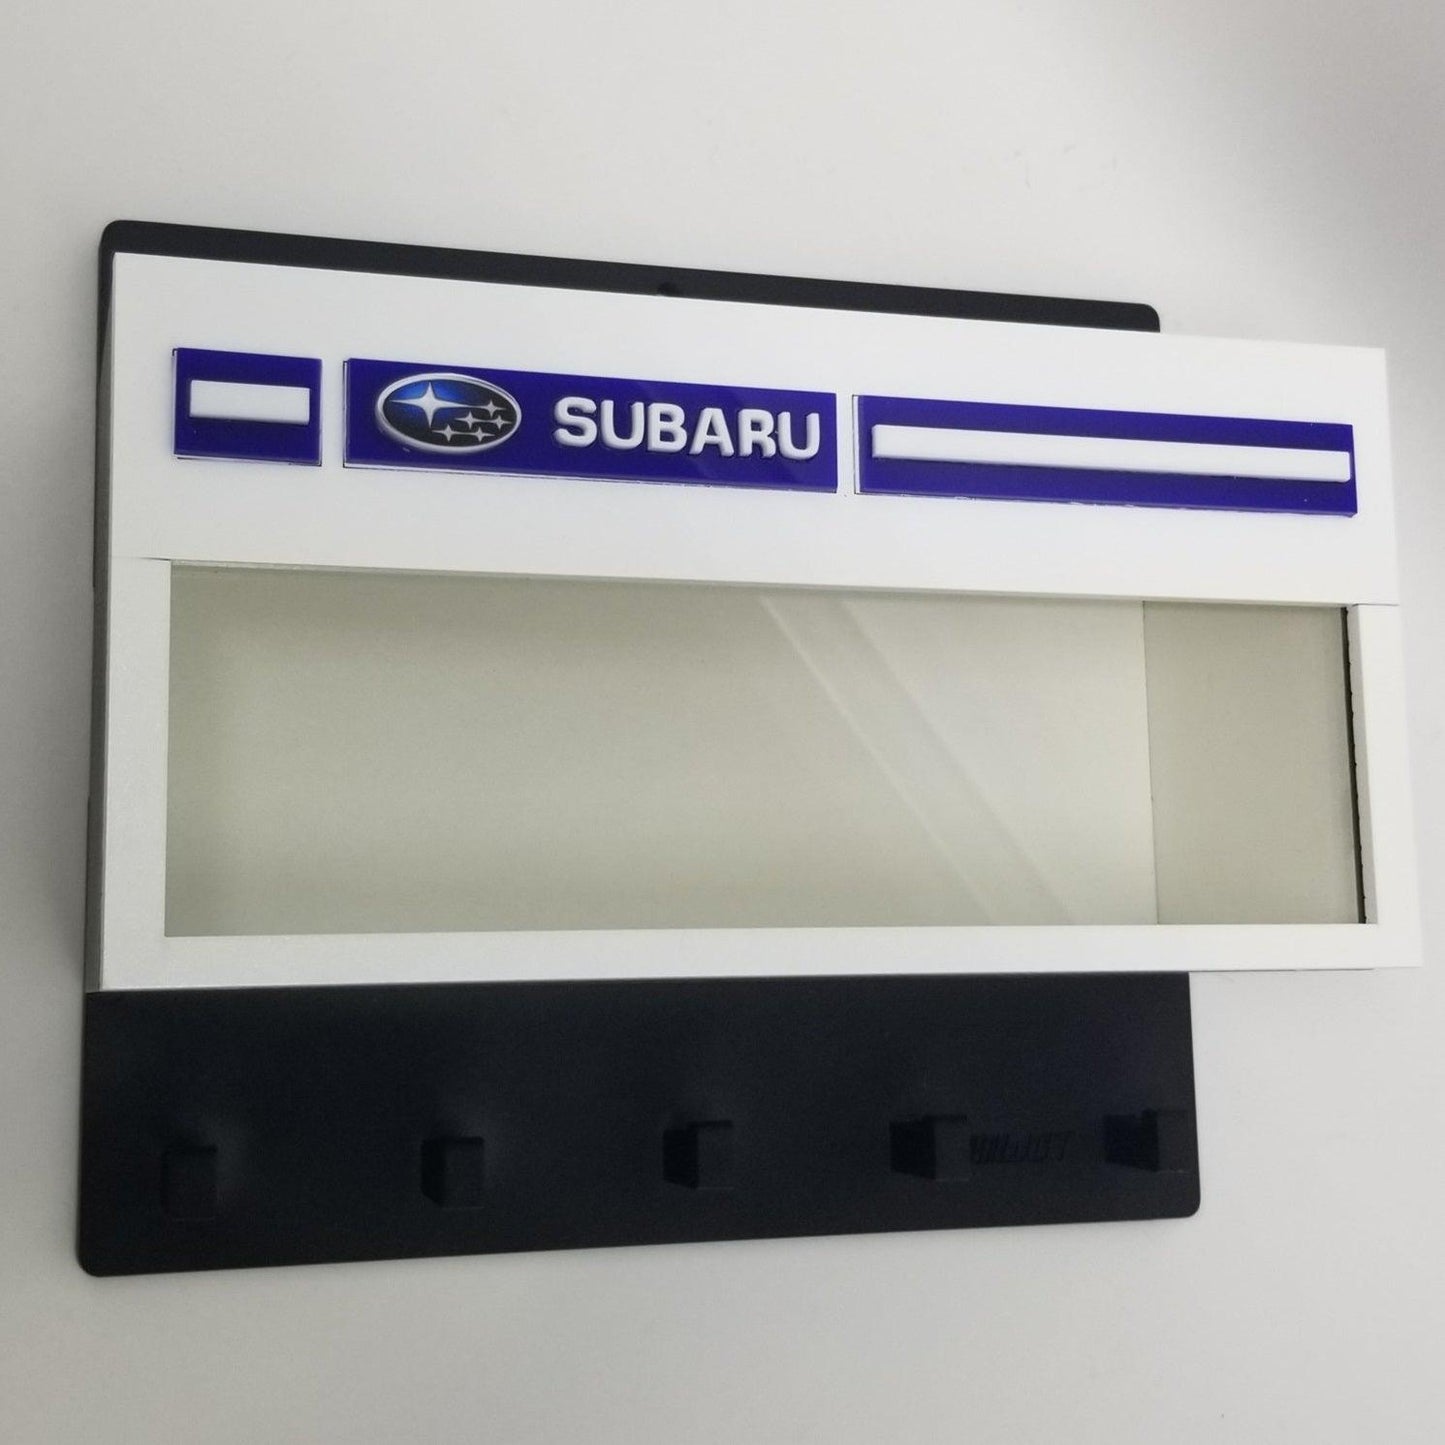 Subaru Dealership Wall Key Hook Rack - Exclusive Item - Handcrafted Key Holder - Brazilian Shop